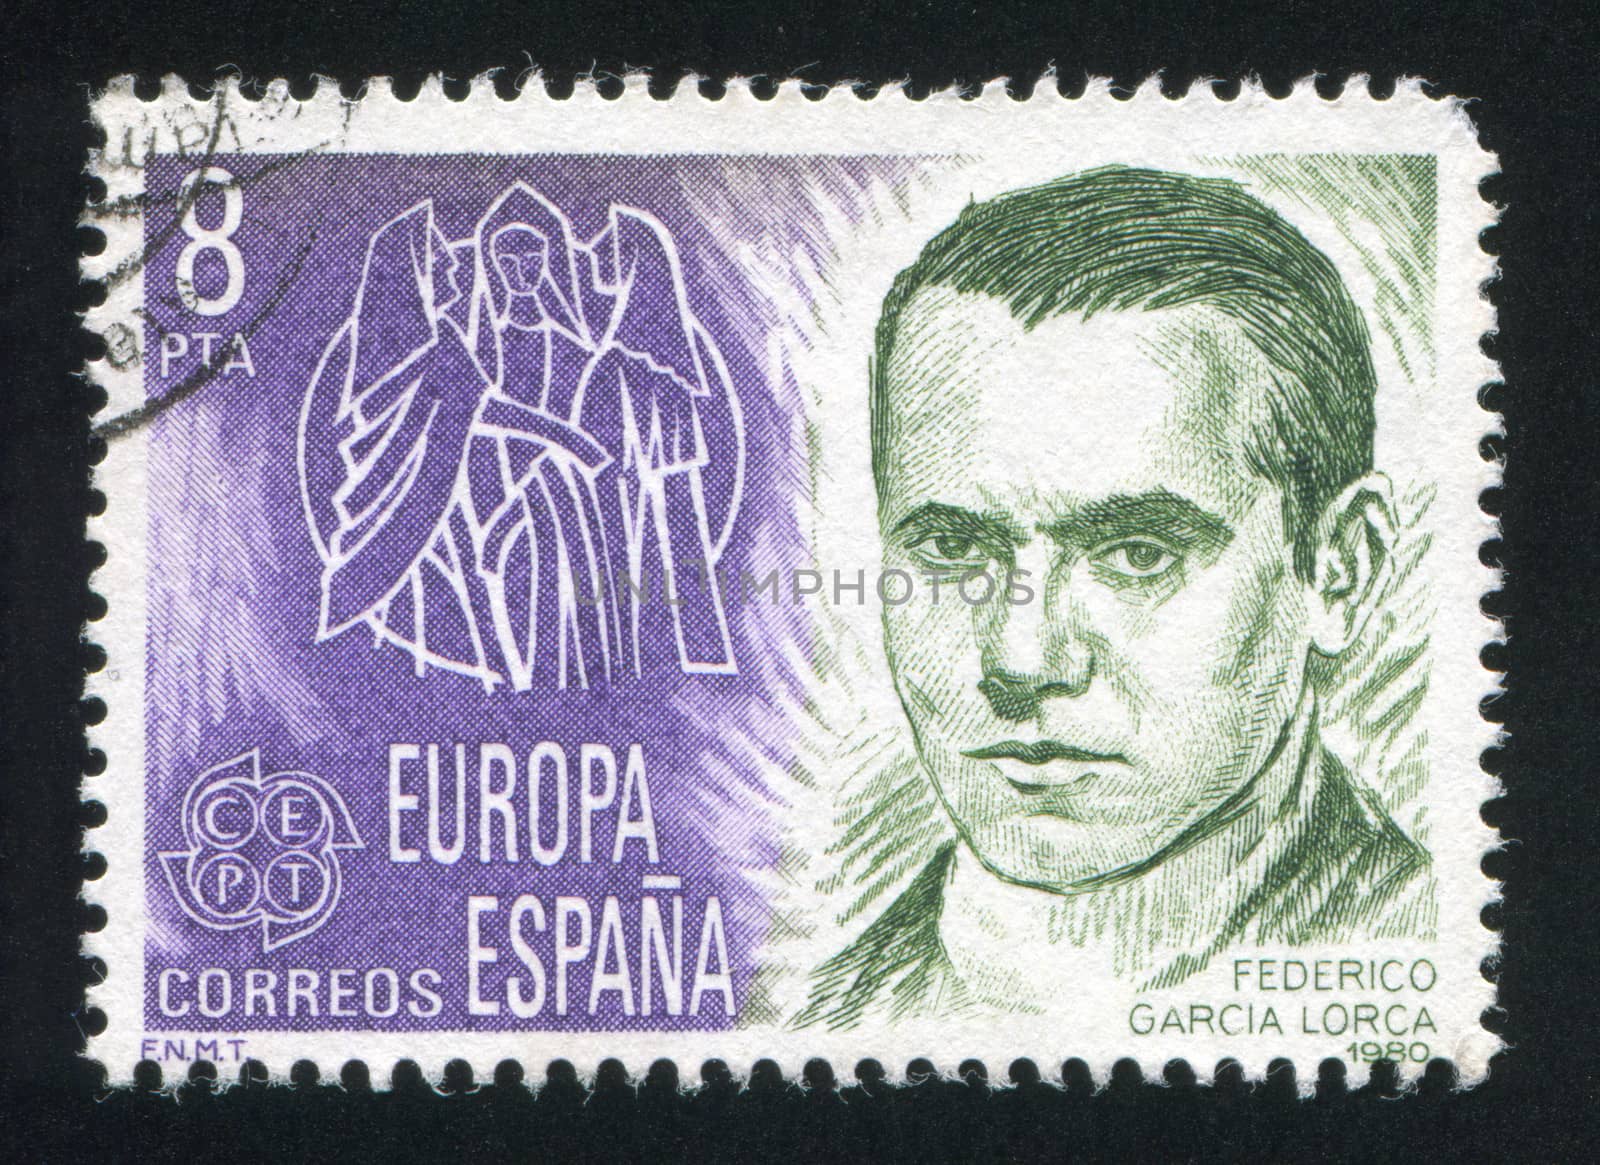 SPAIN - CIRCA 1980: stamp printed by Spain, shows Portrait of Federico Garcia Lorca, circa 1980